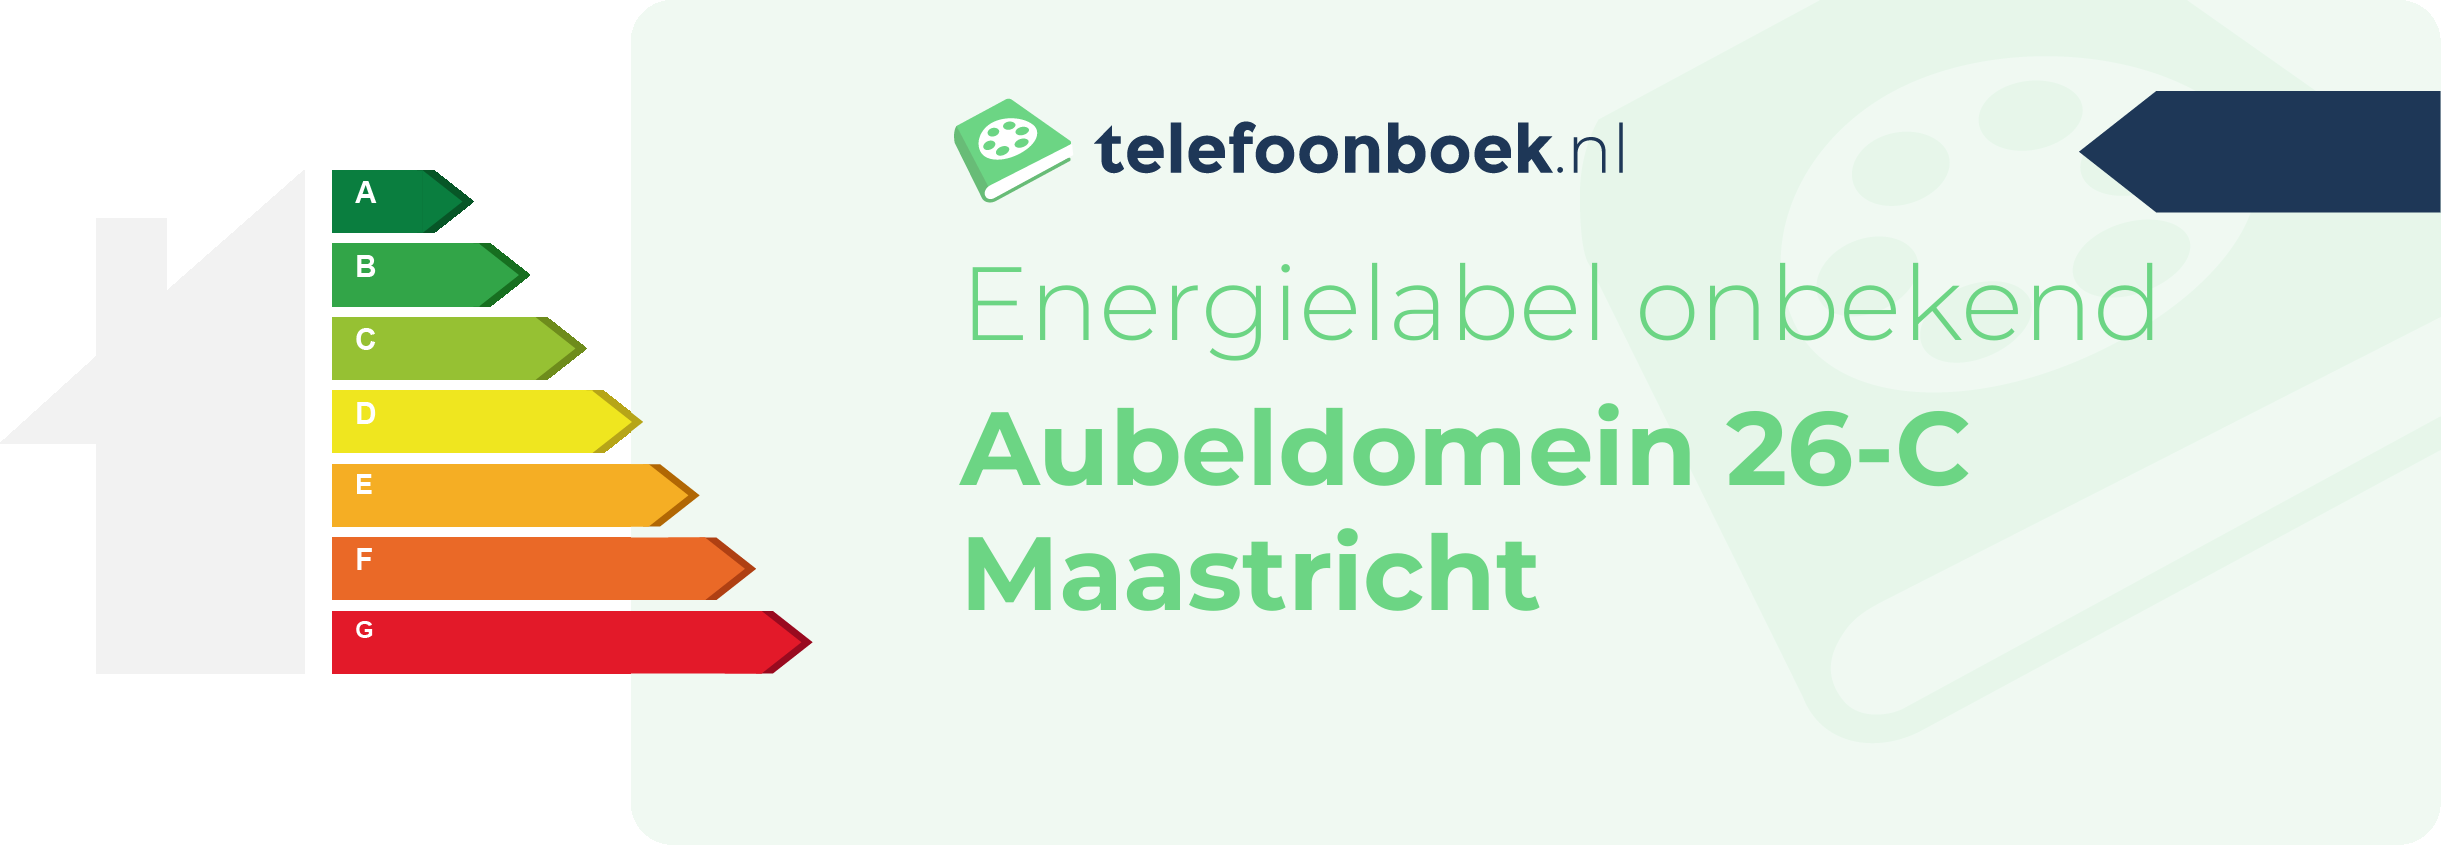 Energielabel Aubeldomein 26-C Maastricht